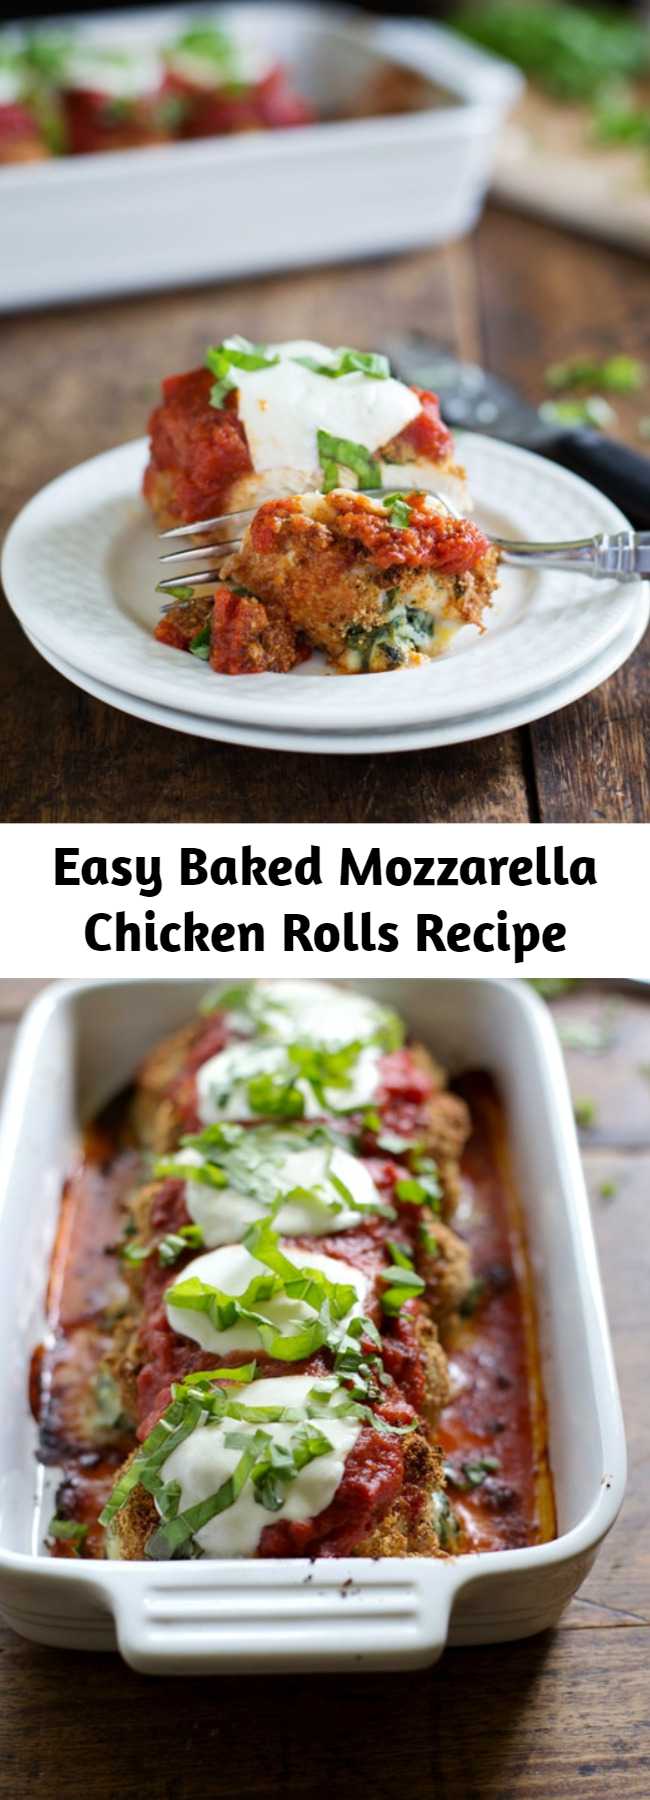 Easy Baked Mozzarella Chicken Rolls Recipe - This recipe for Baked Mozzarella Chicken Rolls is easy, delicious, and beautiful! #healthy #dinner #chickenrecipe #recipe